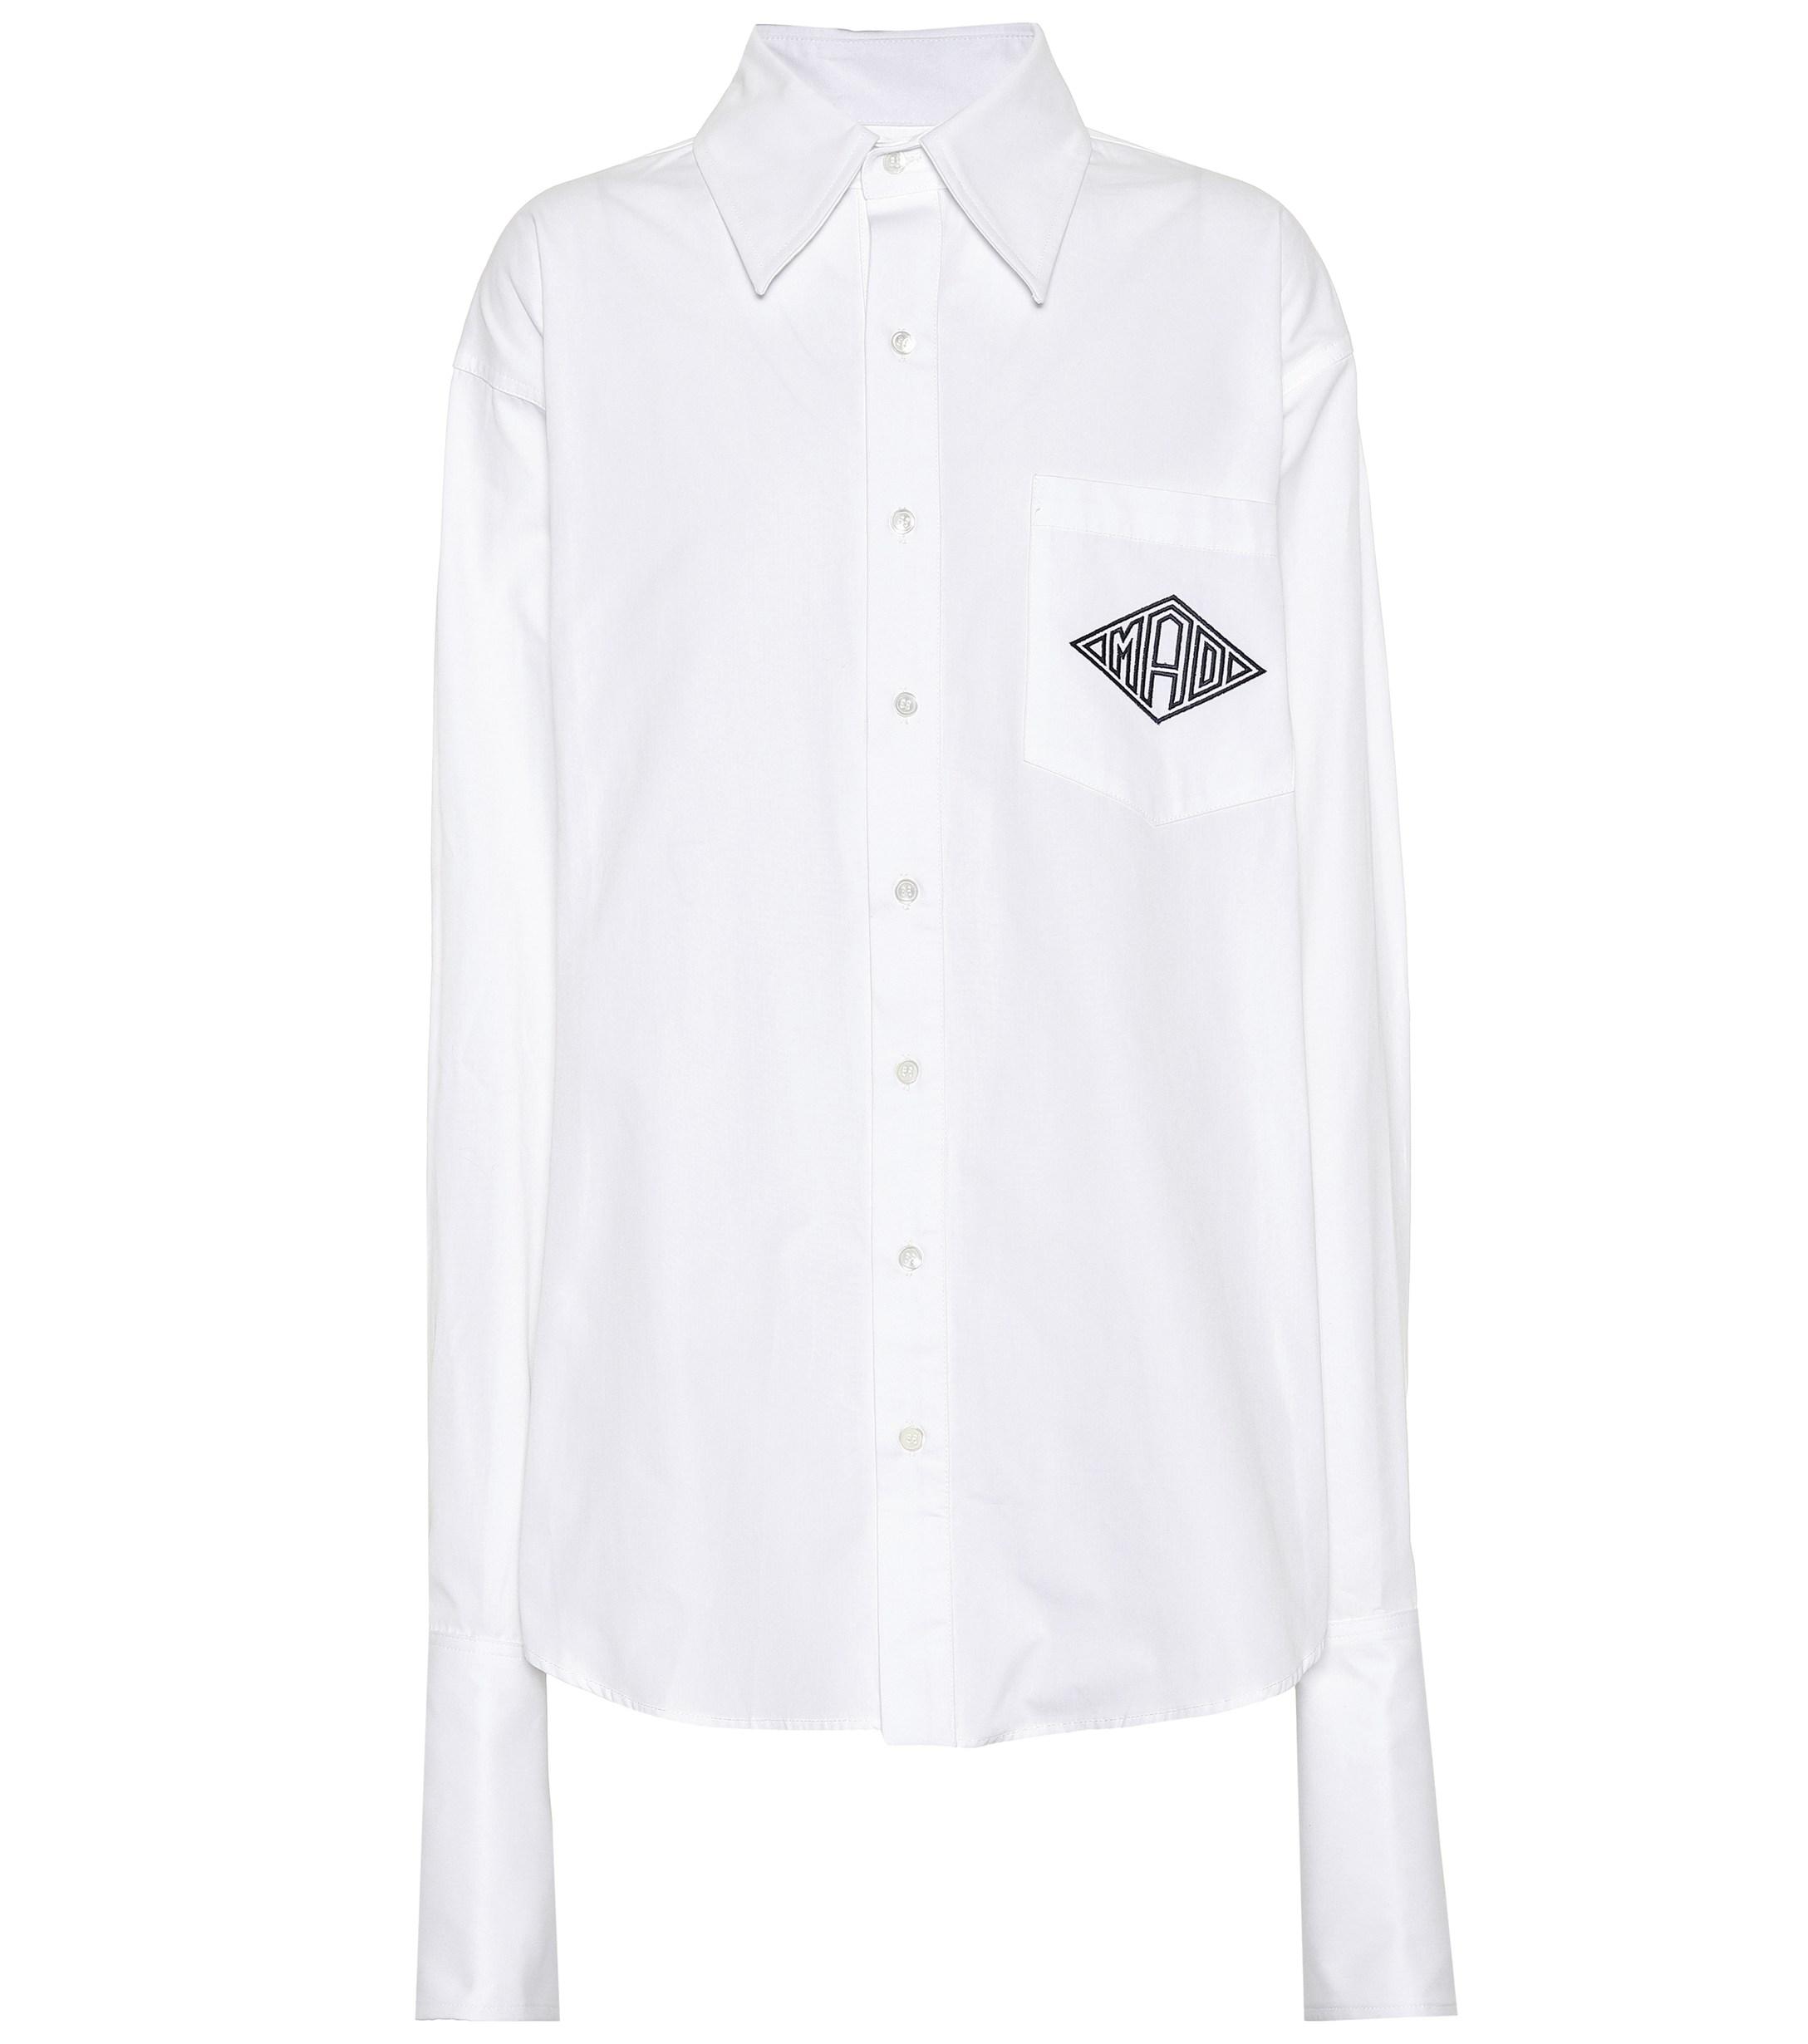 Matthew Adams Dolan Logo Printed Cotton Shirt in White Black (White) - Lyst